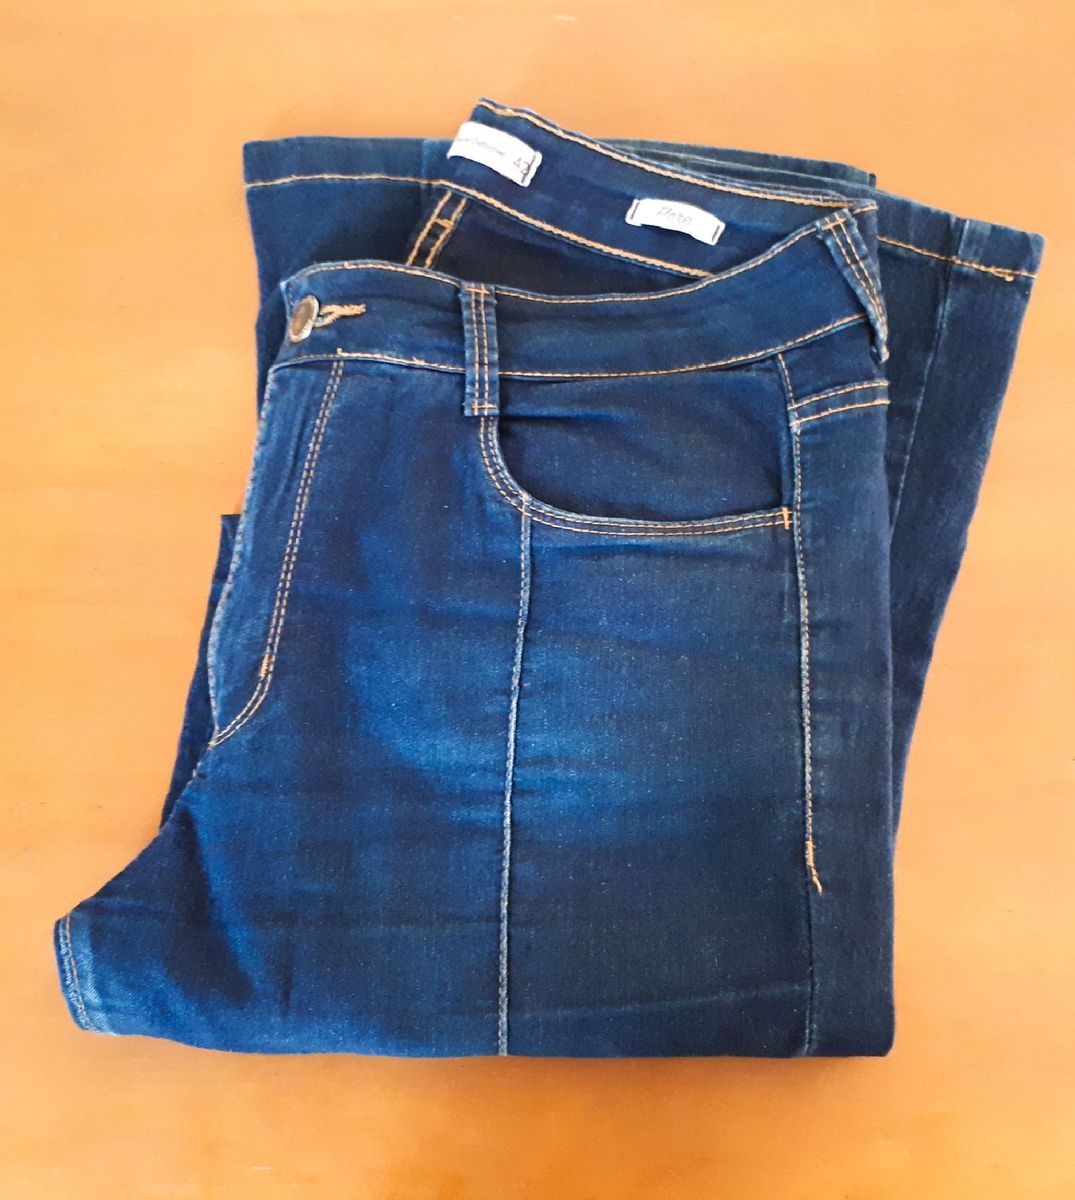 ink jeans denim collection feminino